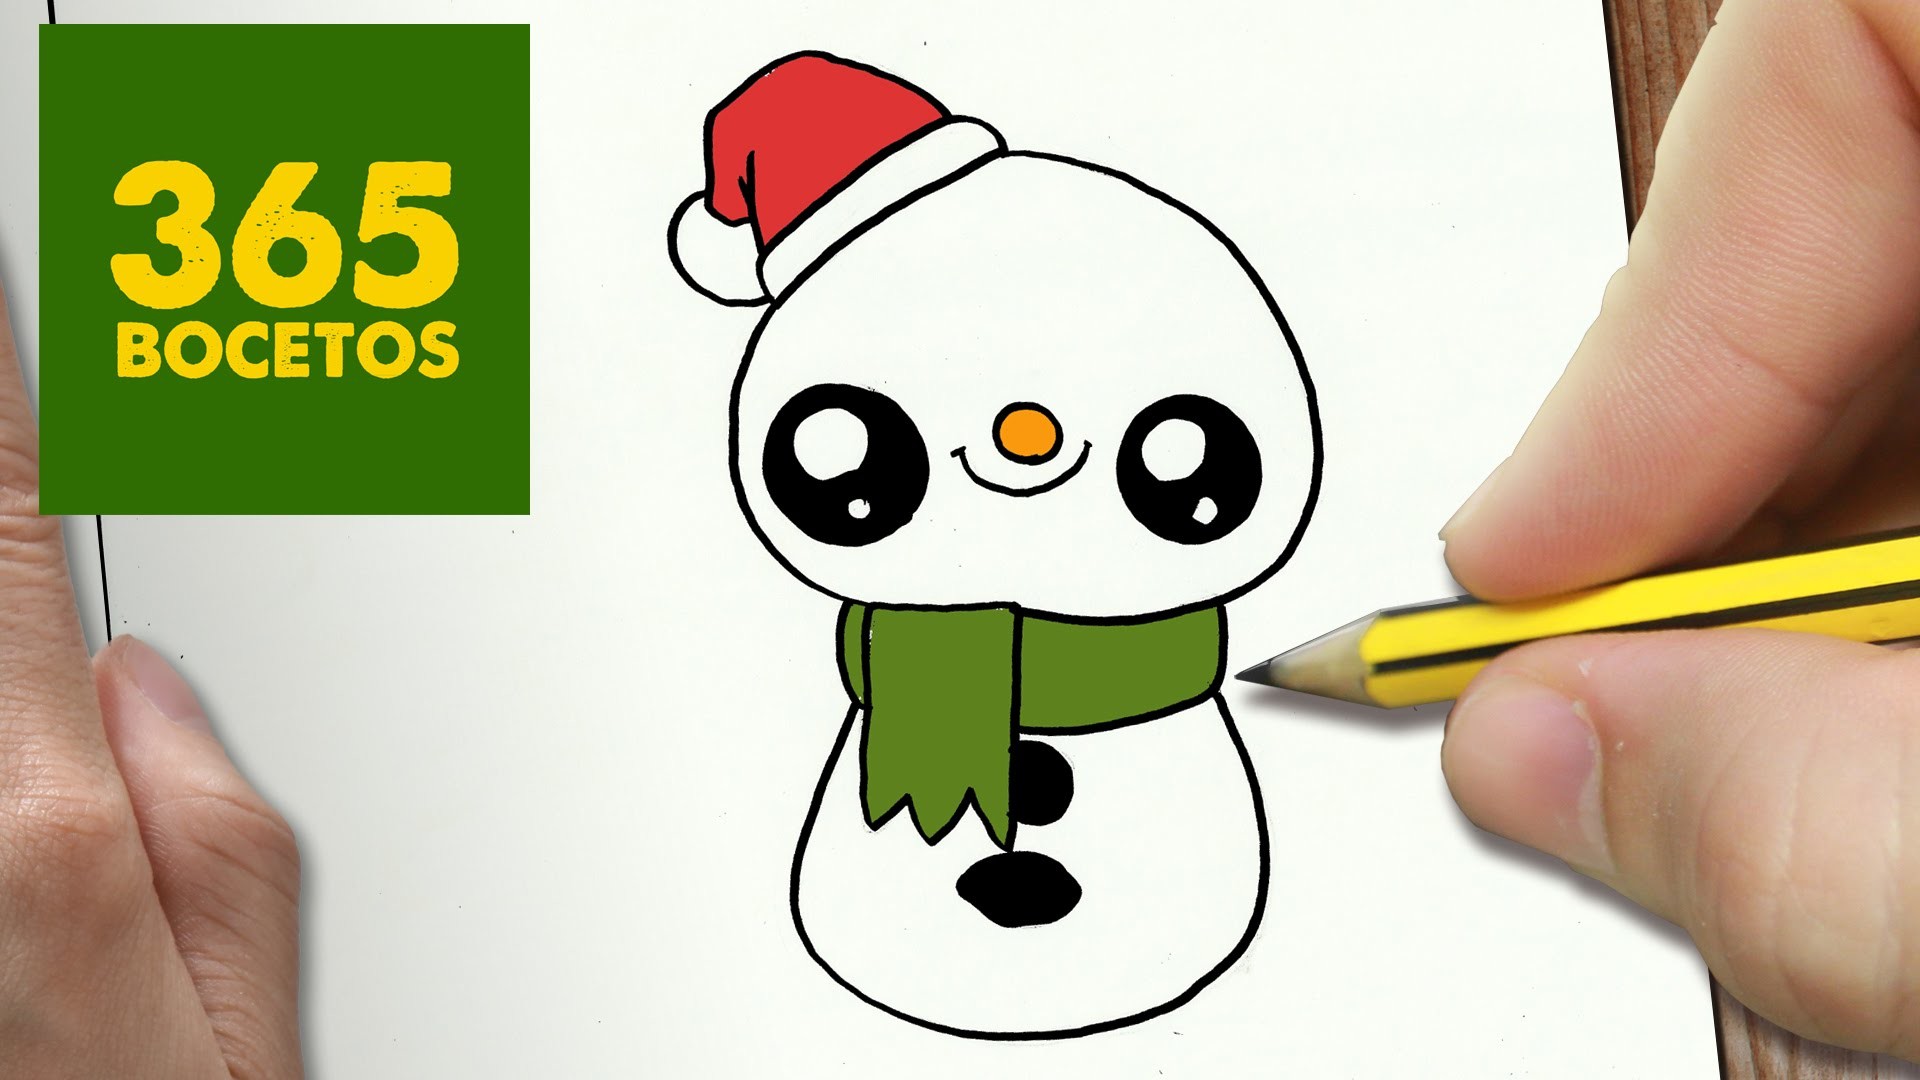 COMO DIBUJAR UN MUÑECO DE NIEVE PARA NAVIDAD PASO A PASO: Dibujos kawaii navideños - draw a SNOWMAN